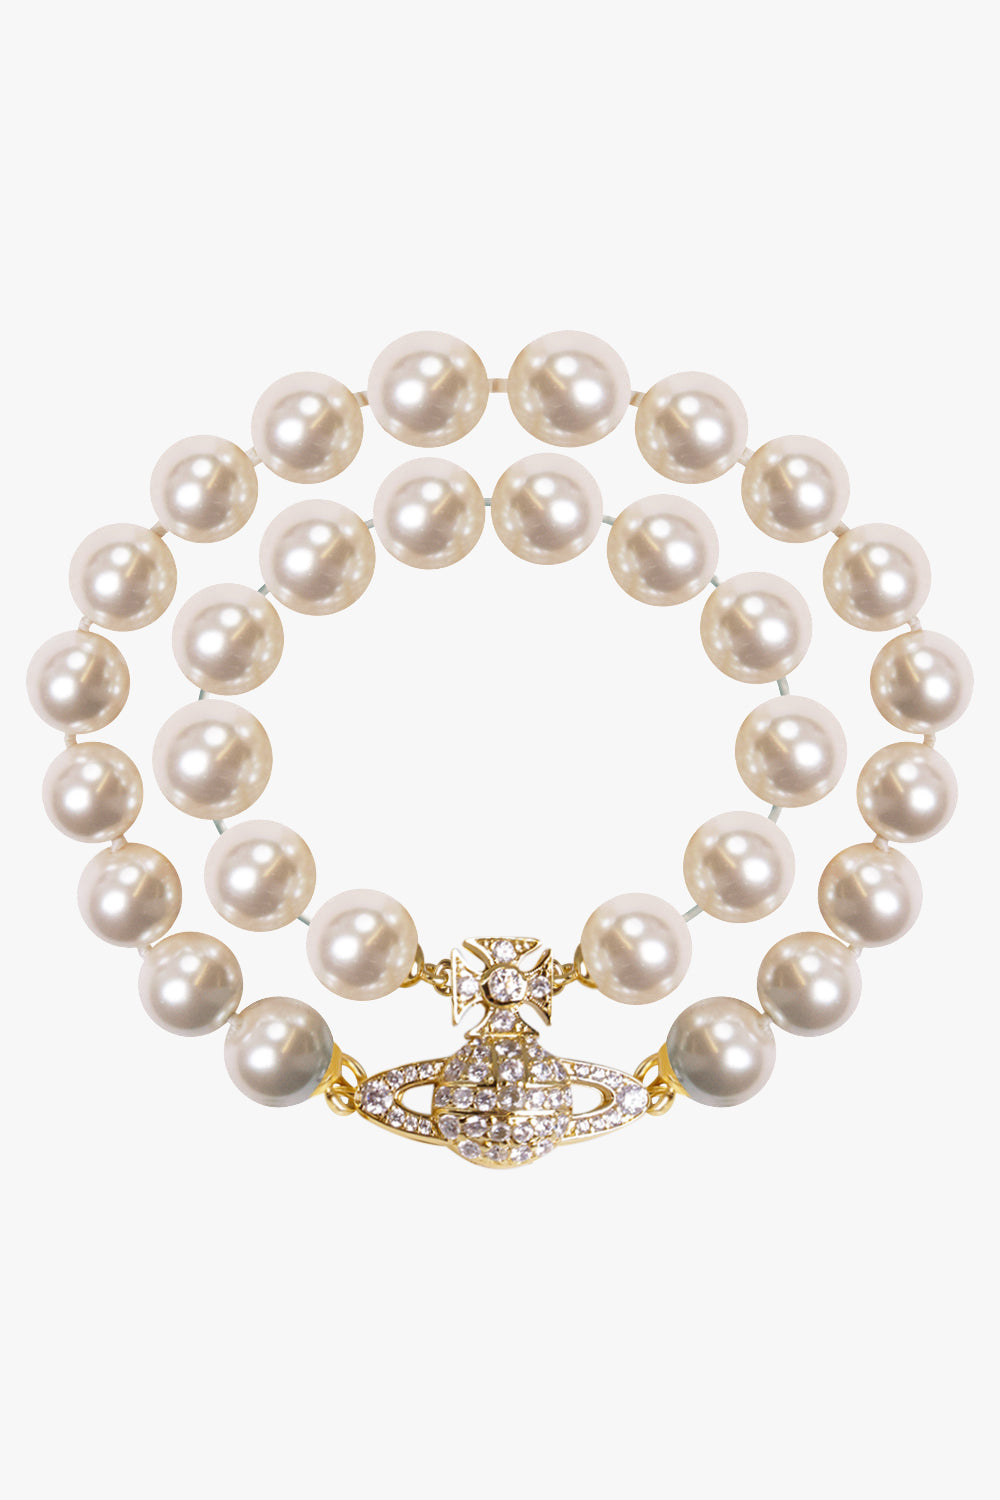 VIVIENNE WESTWOOD JEWELLERY Gold Graziella Pearl Bracelet | Gold/Cream Rose Pearl/White